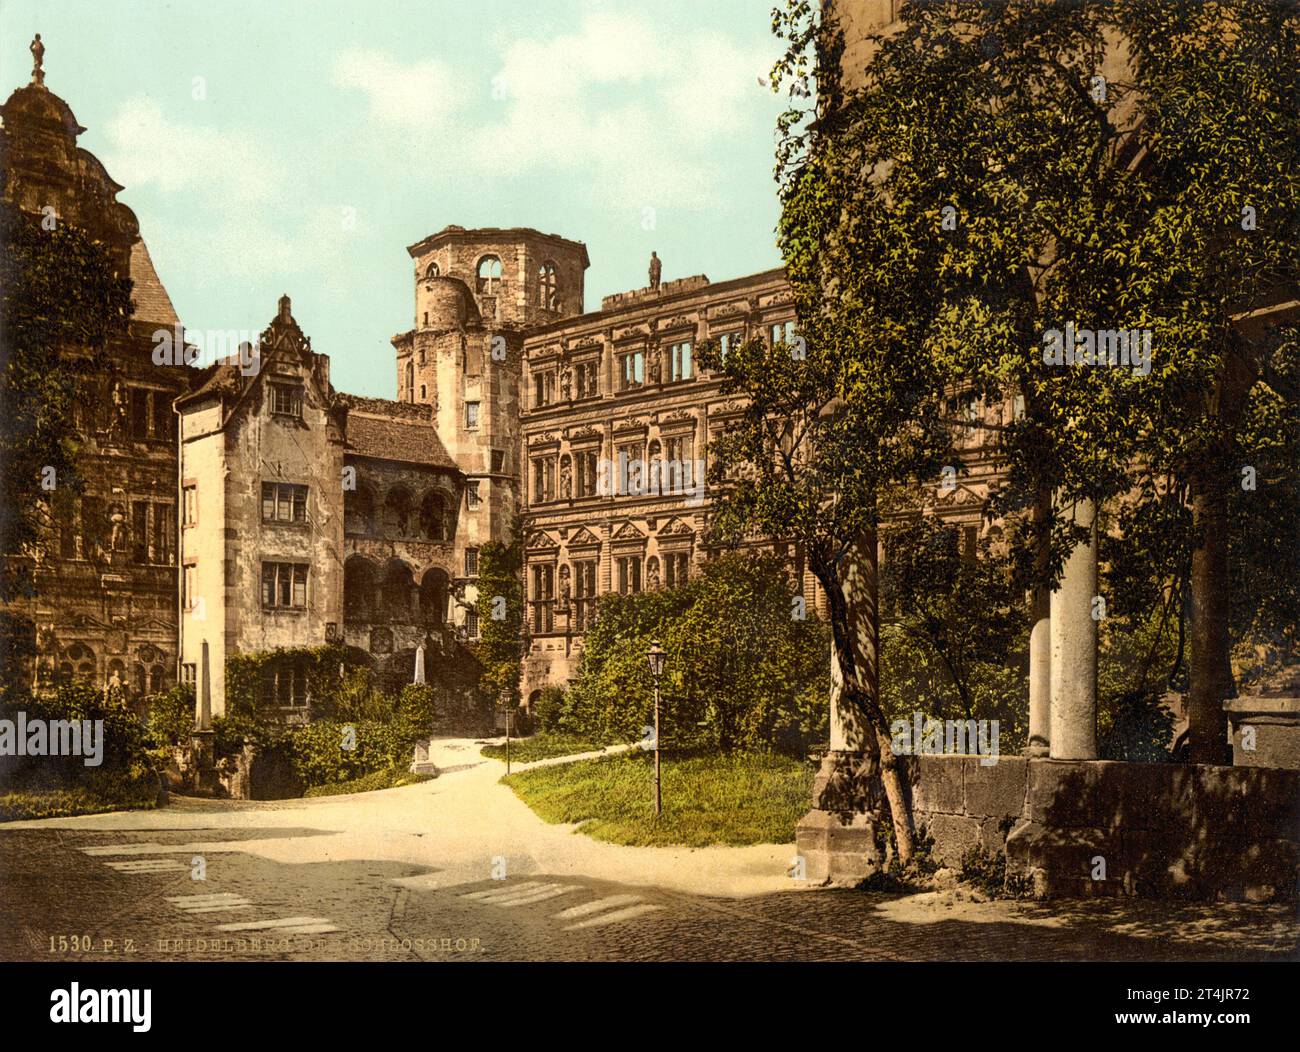 Castle Yard, Heidelberg, Germany, ca. 1895  Photochrom print by Photoglob Zürich, between 1890 and 1900. Stock Photo